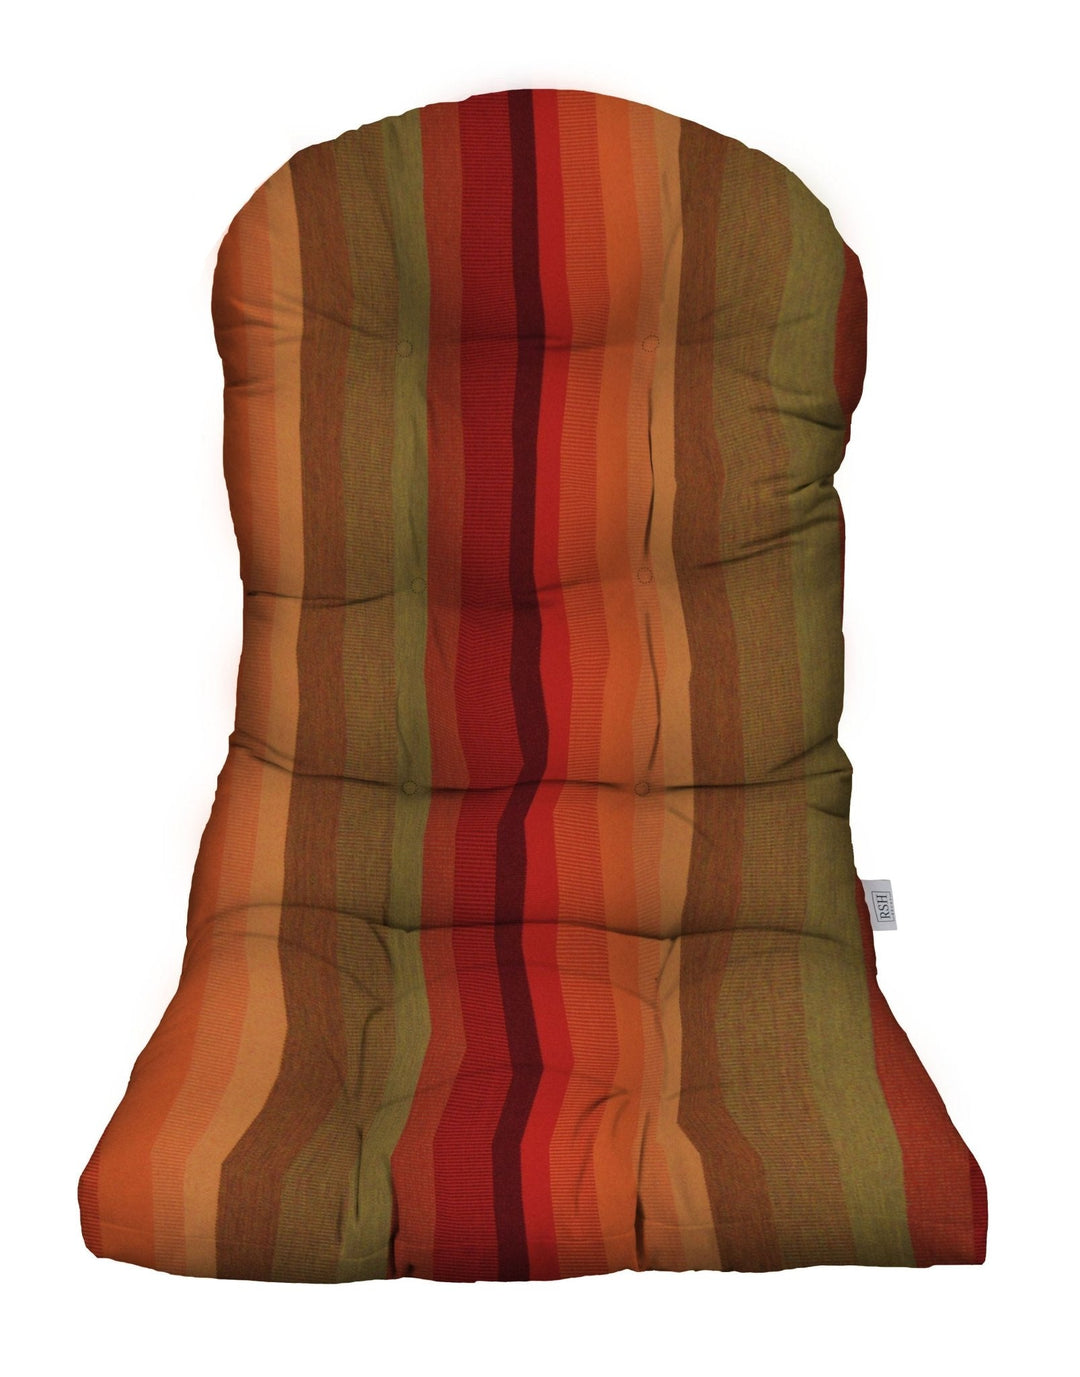 Adirondack Cushion, Tufted, Sunbrella Pattern - RSH Decor